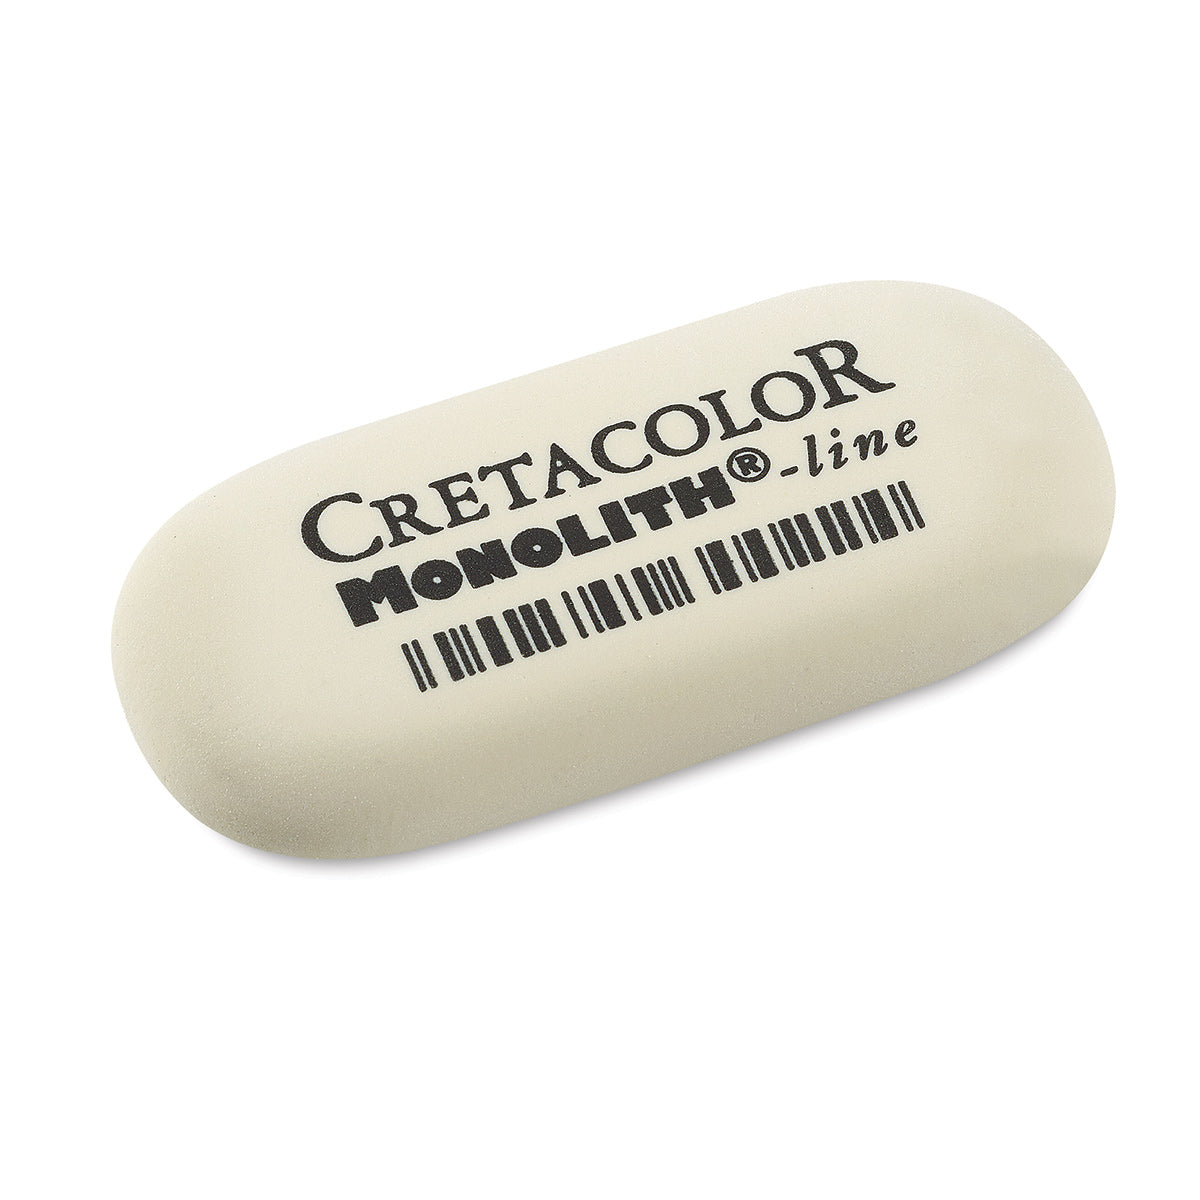 Cretacolor MONOLITH Synthetic Rubber Eraser